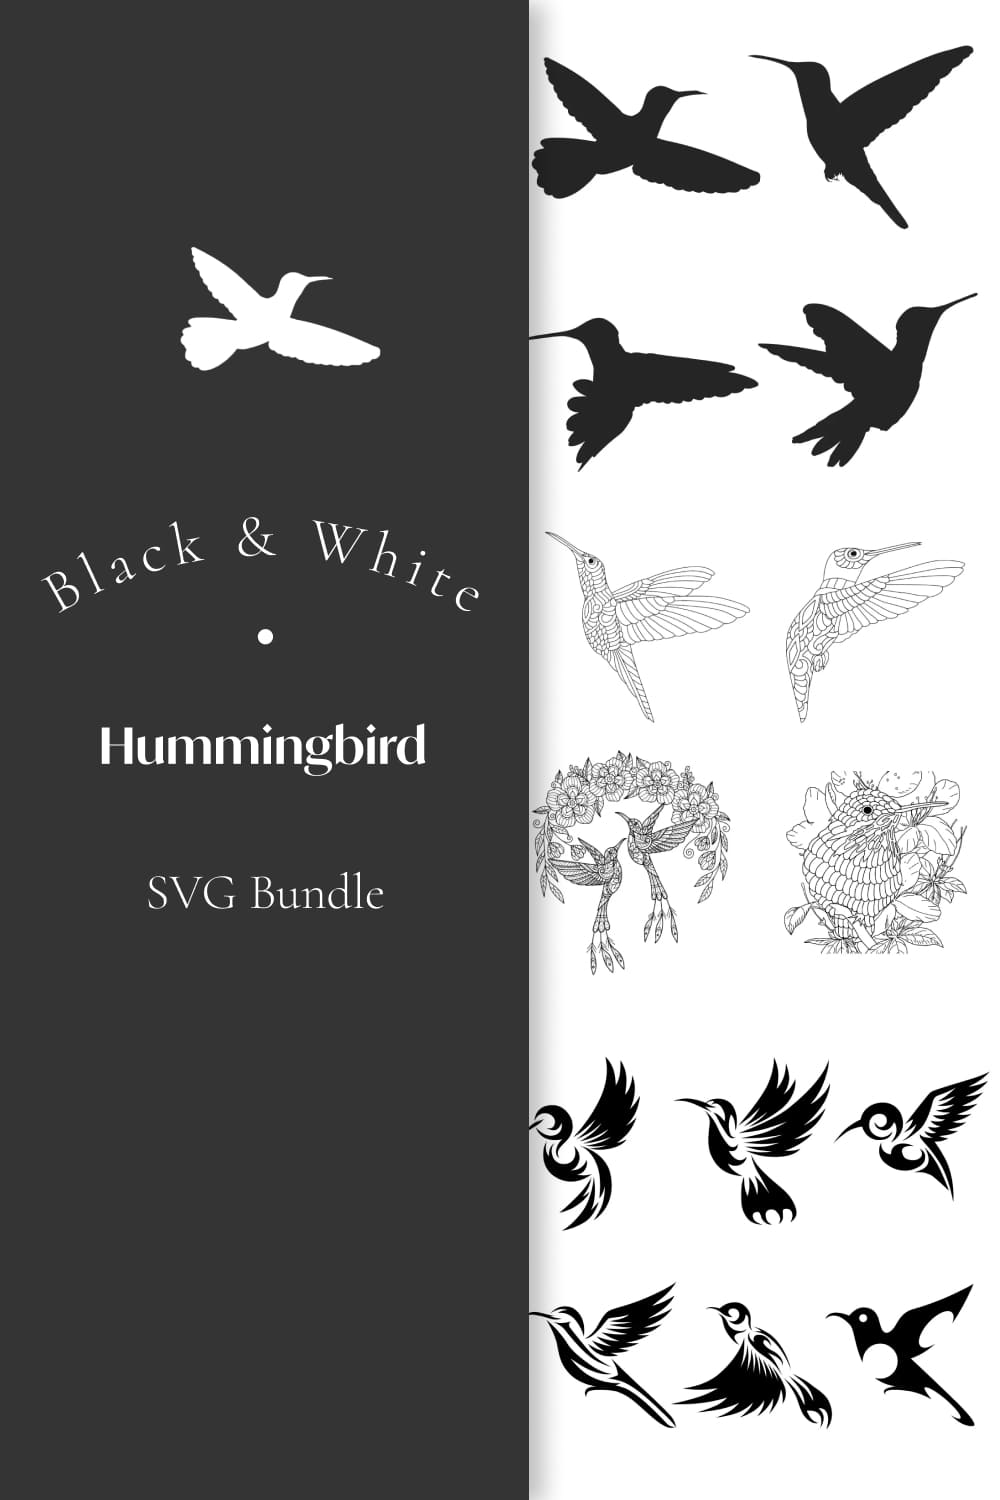 Black & White Hummingbird SVG Bundle - Pinterest.